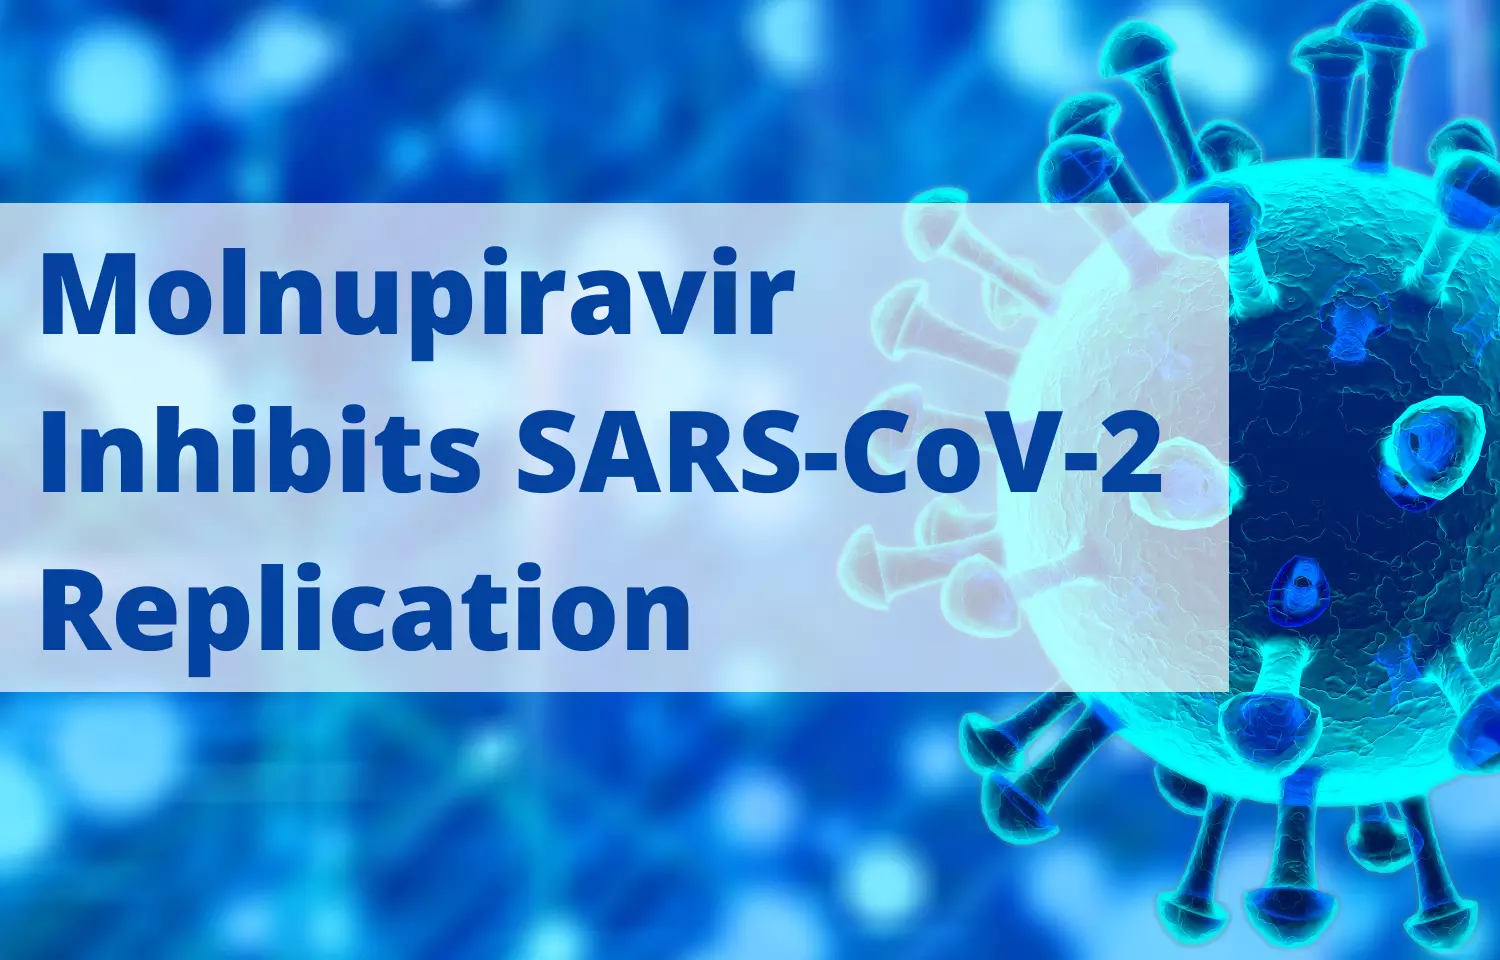 Molnupiravir (MK-4482/EIDD-2801) inhibits SARS-CoV-2 replication in Syrian Hamster Model